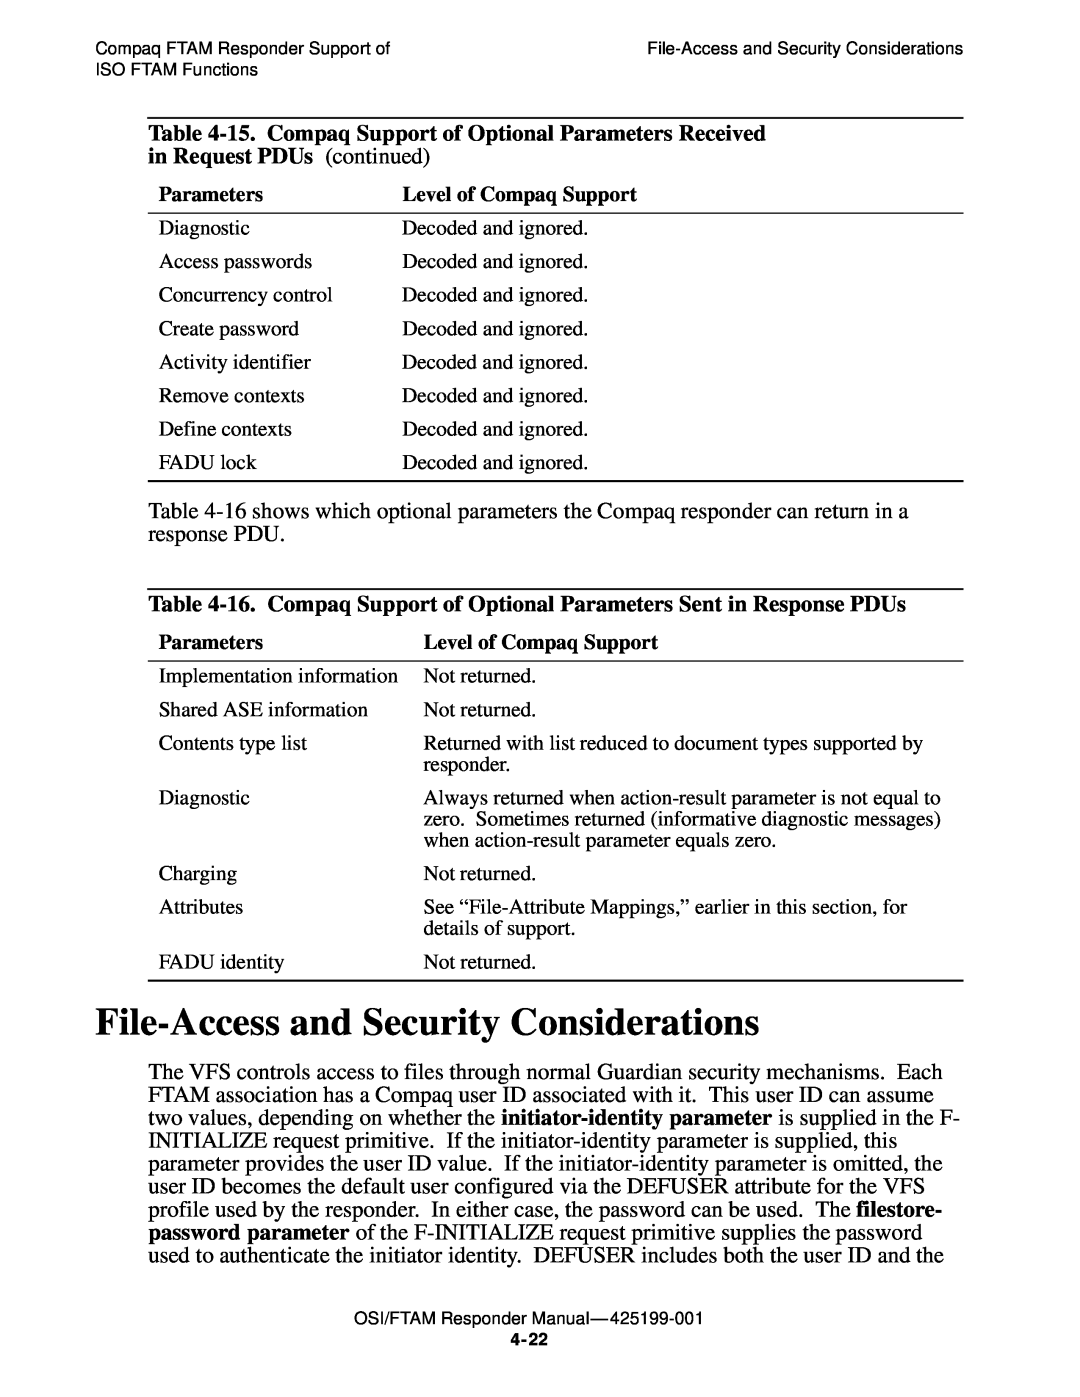 Compaq OSI/APLMGR D43, OSI/FTAM D43 manual File-Access and Security Considerations 